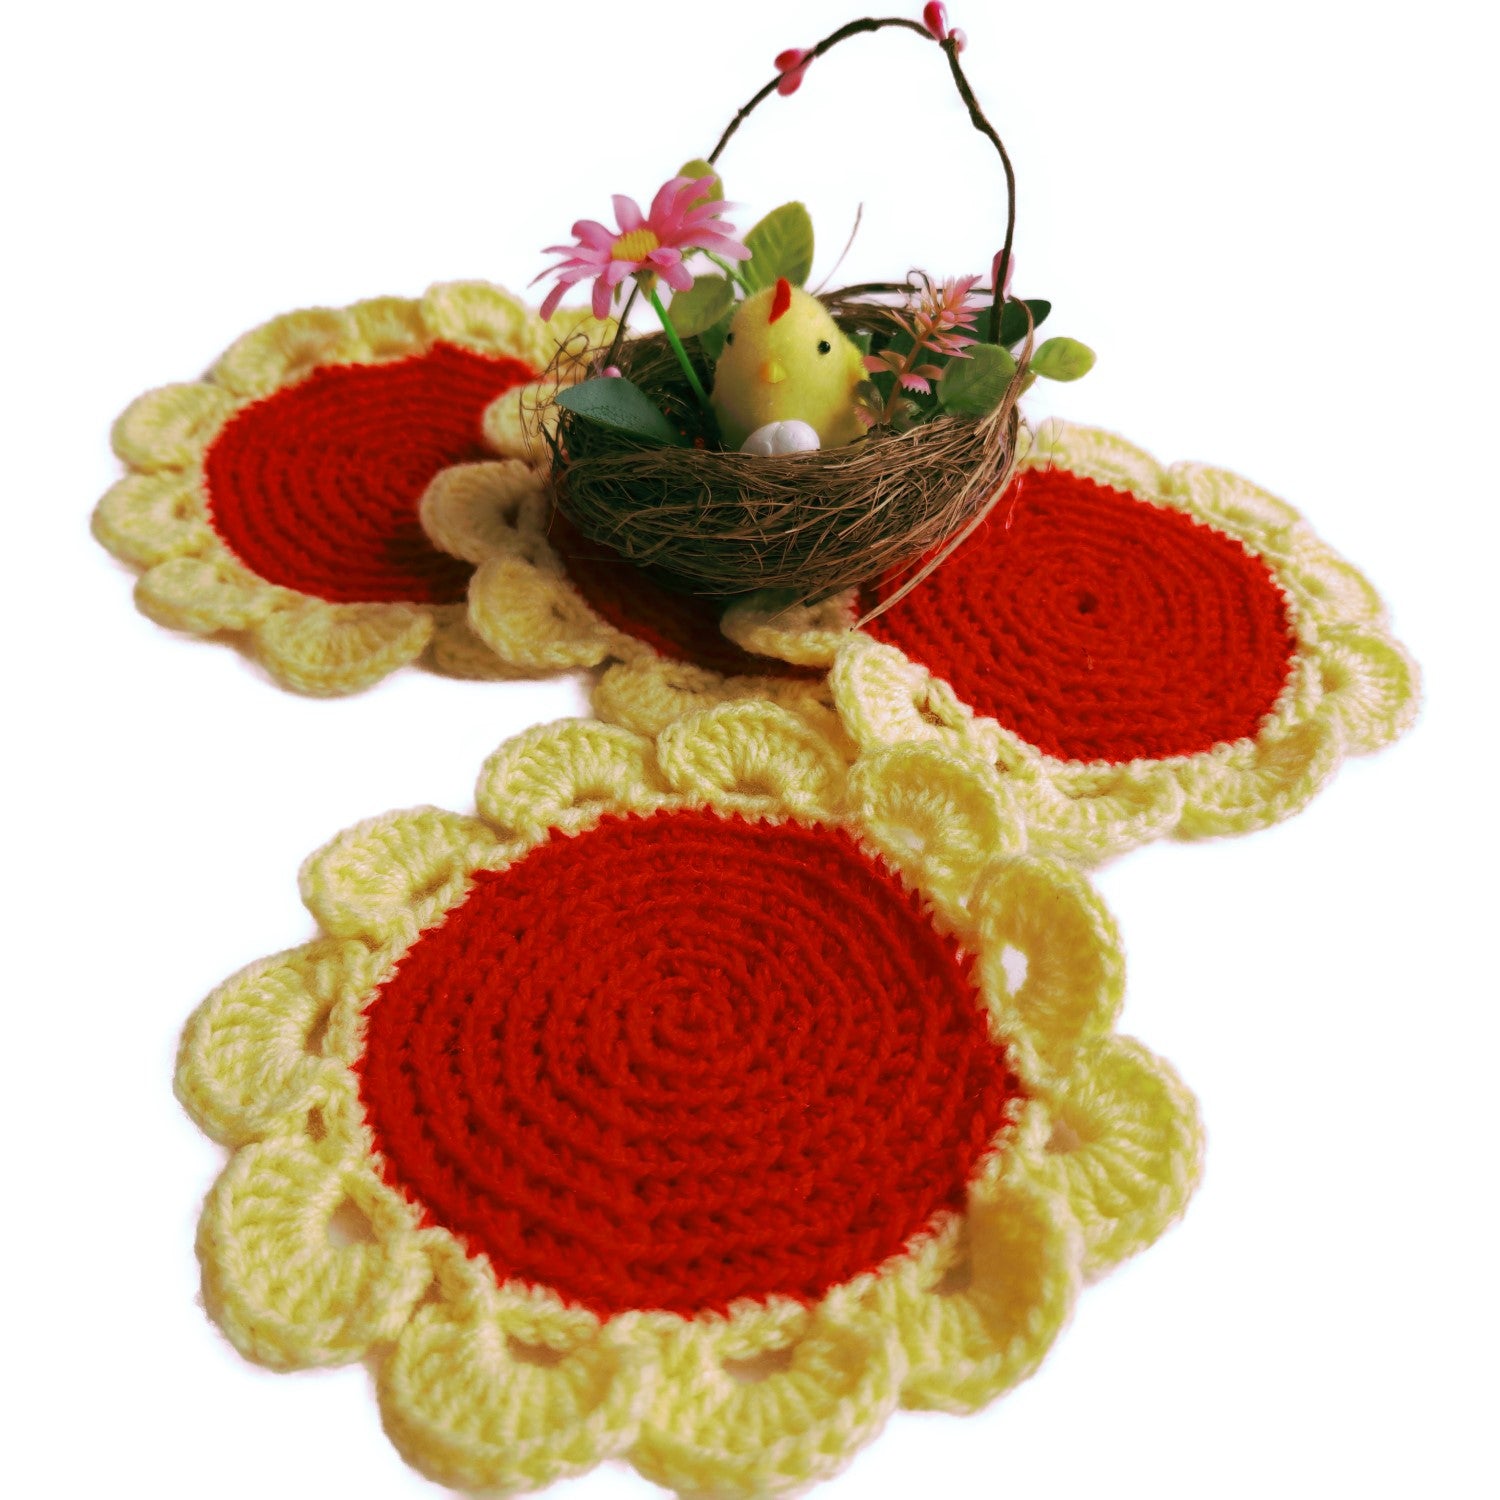 handmade-tea-coaster-red-yellow-flower-circle-shape